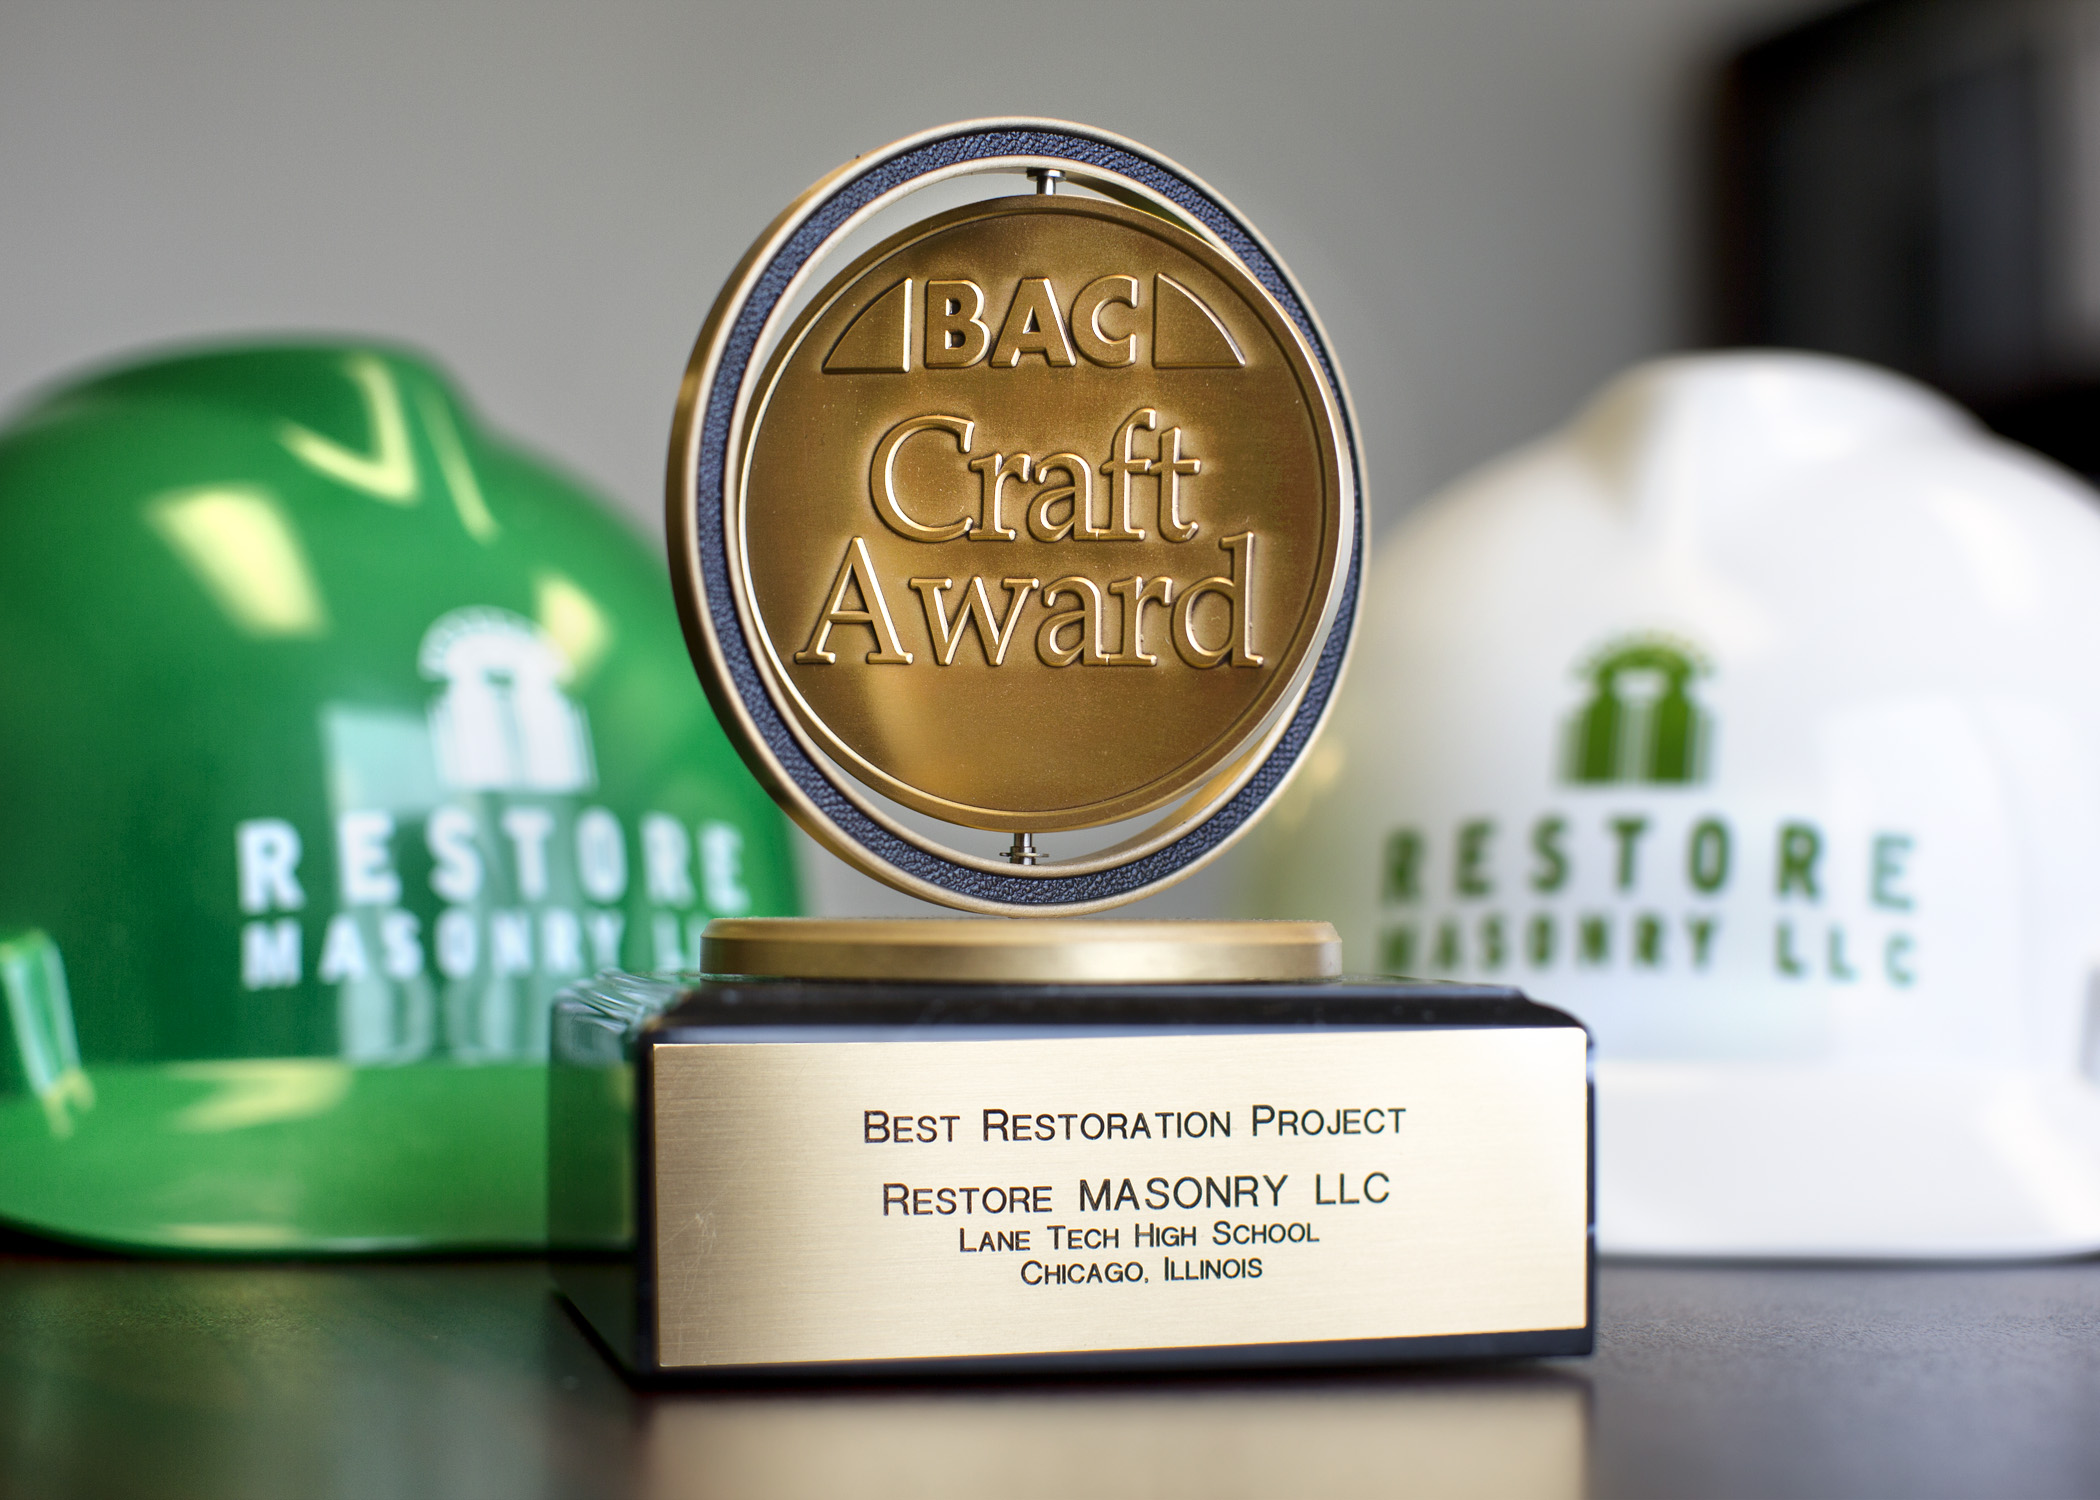 BAC Craft Award – Best Restoration Project